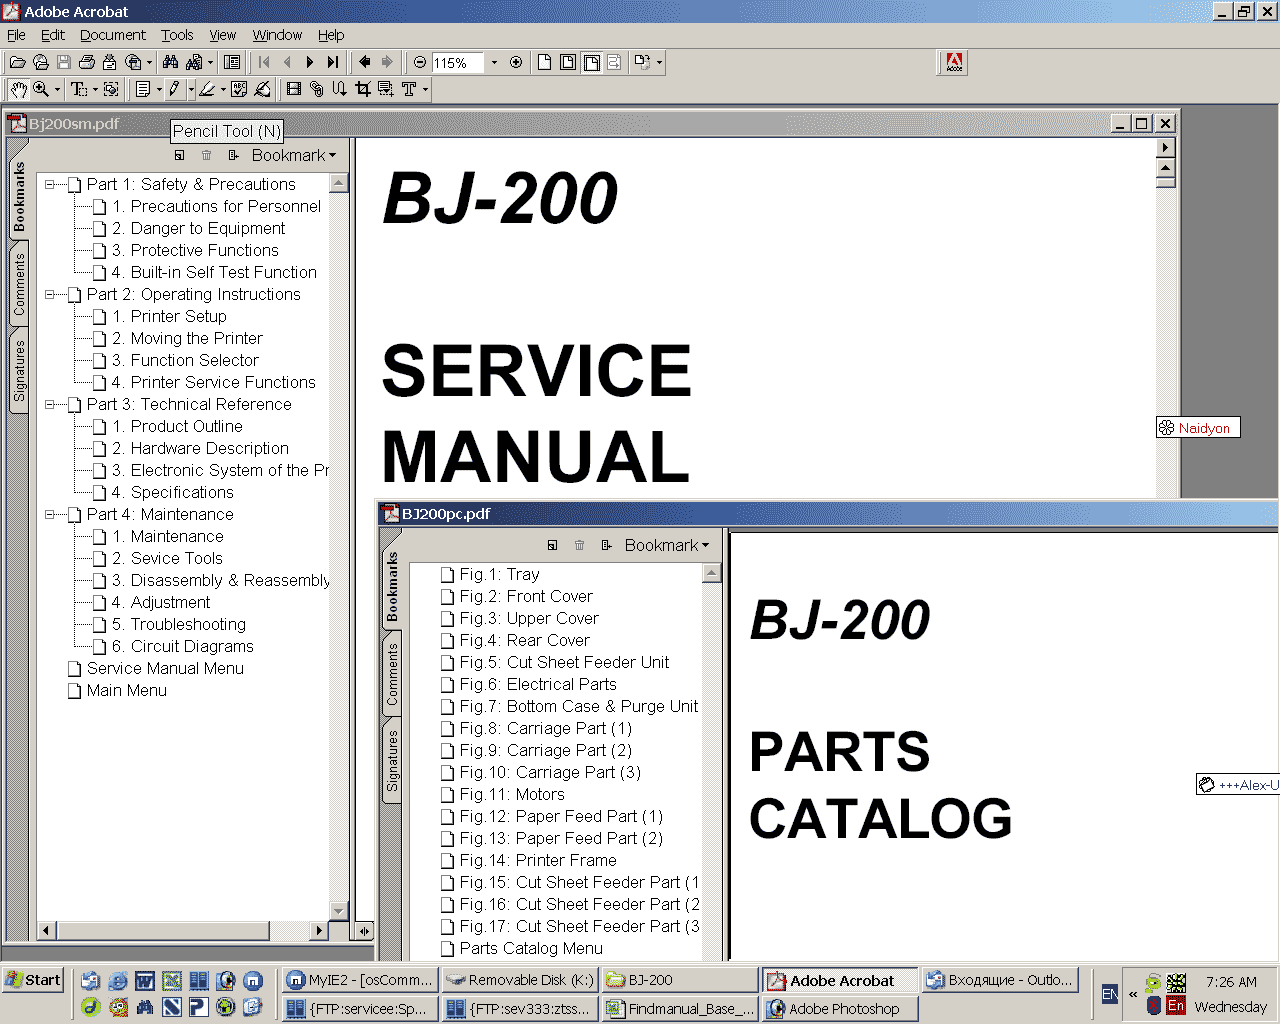 CANON BJ-200 printer Service Manual and Parts Catalog